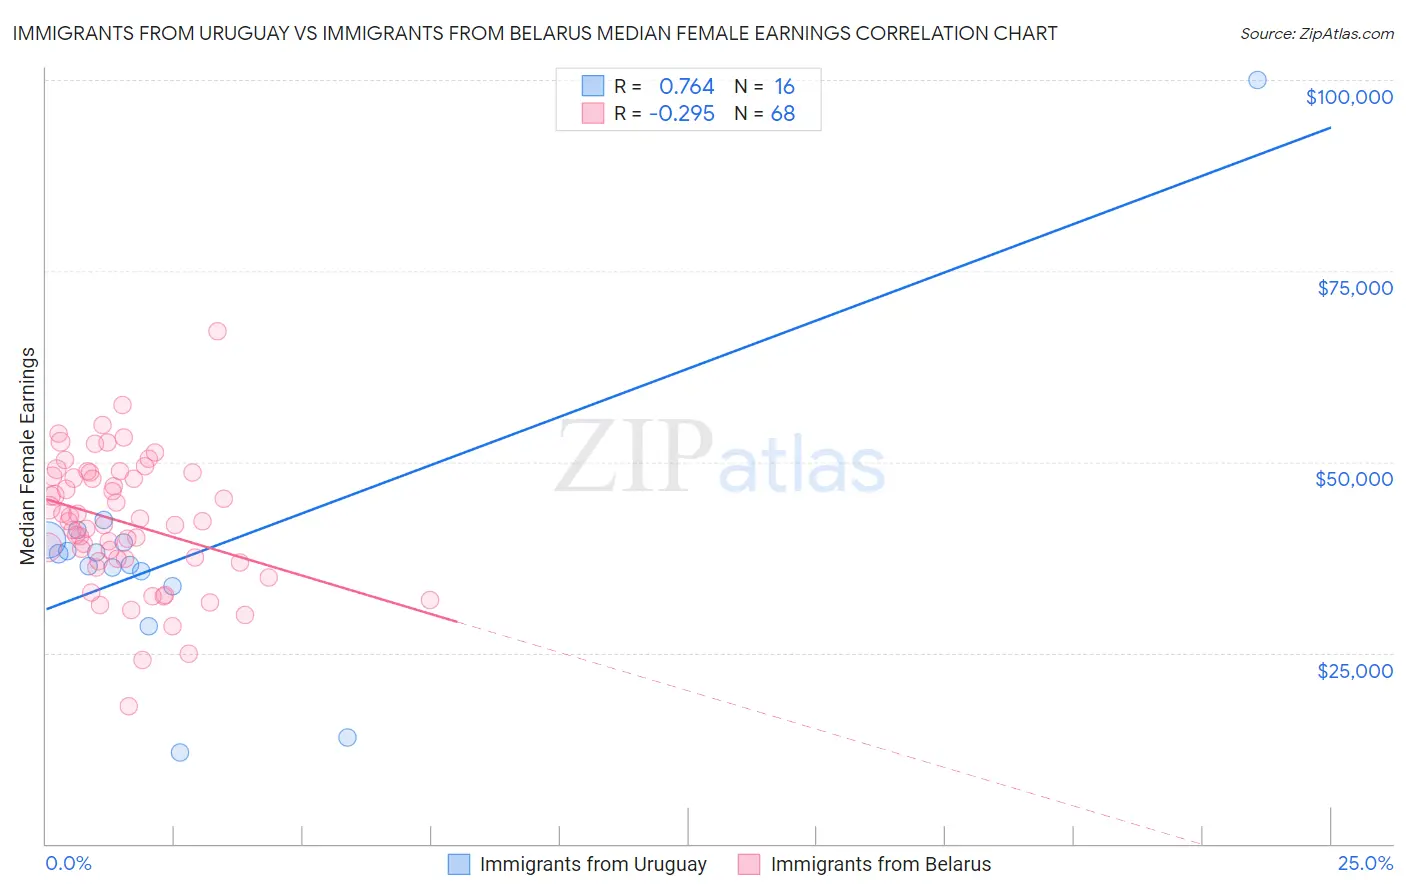 Immigrants from Uruguay vs Immigrants from Belarus Median Female Earnings